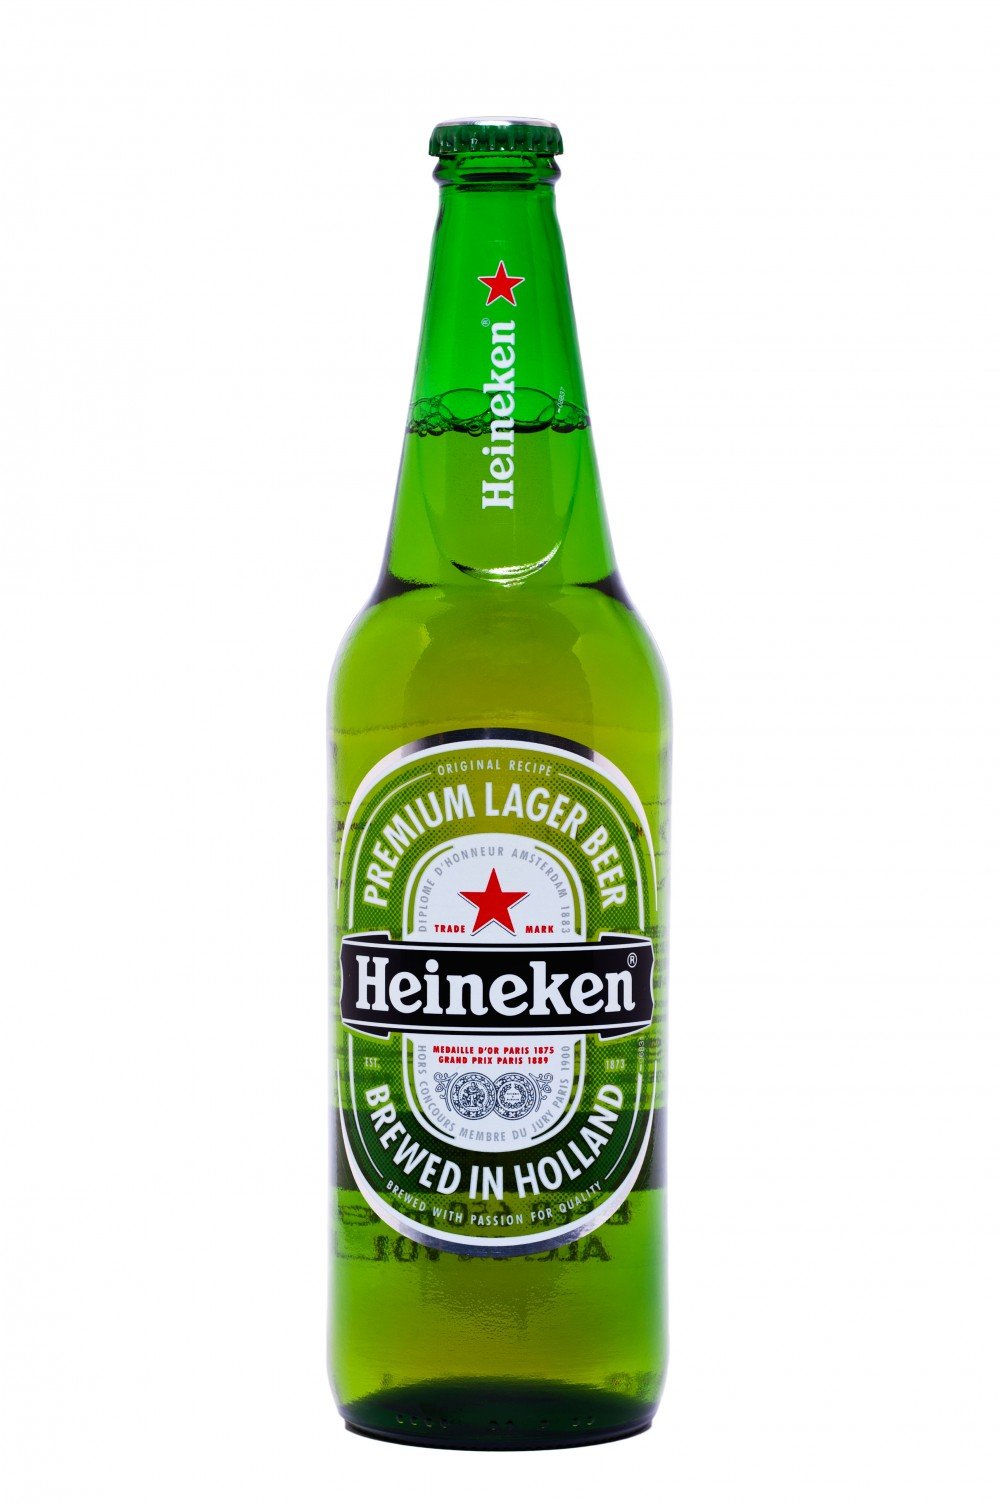 A bottle of Heineken premium lager beer on a white background